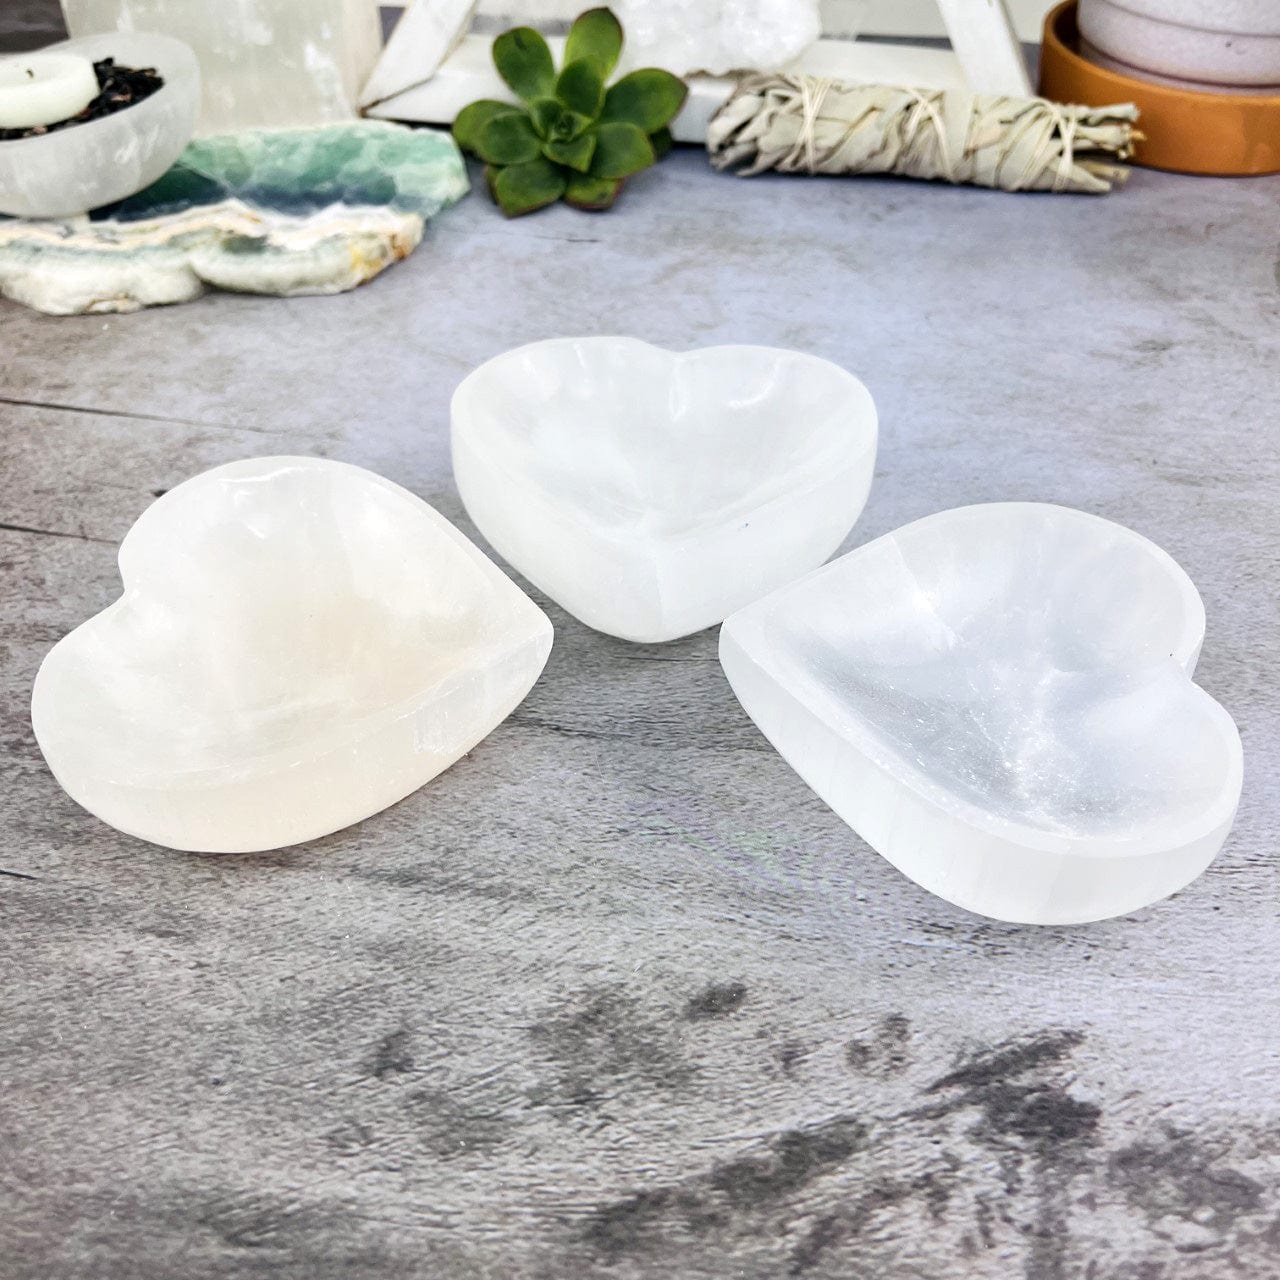 3 Selenite Heart Bowls on a table